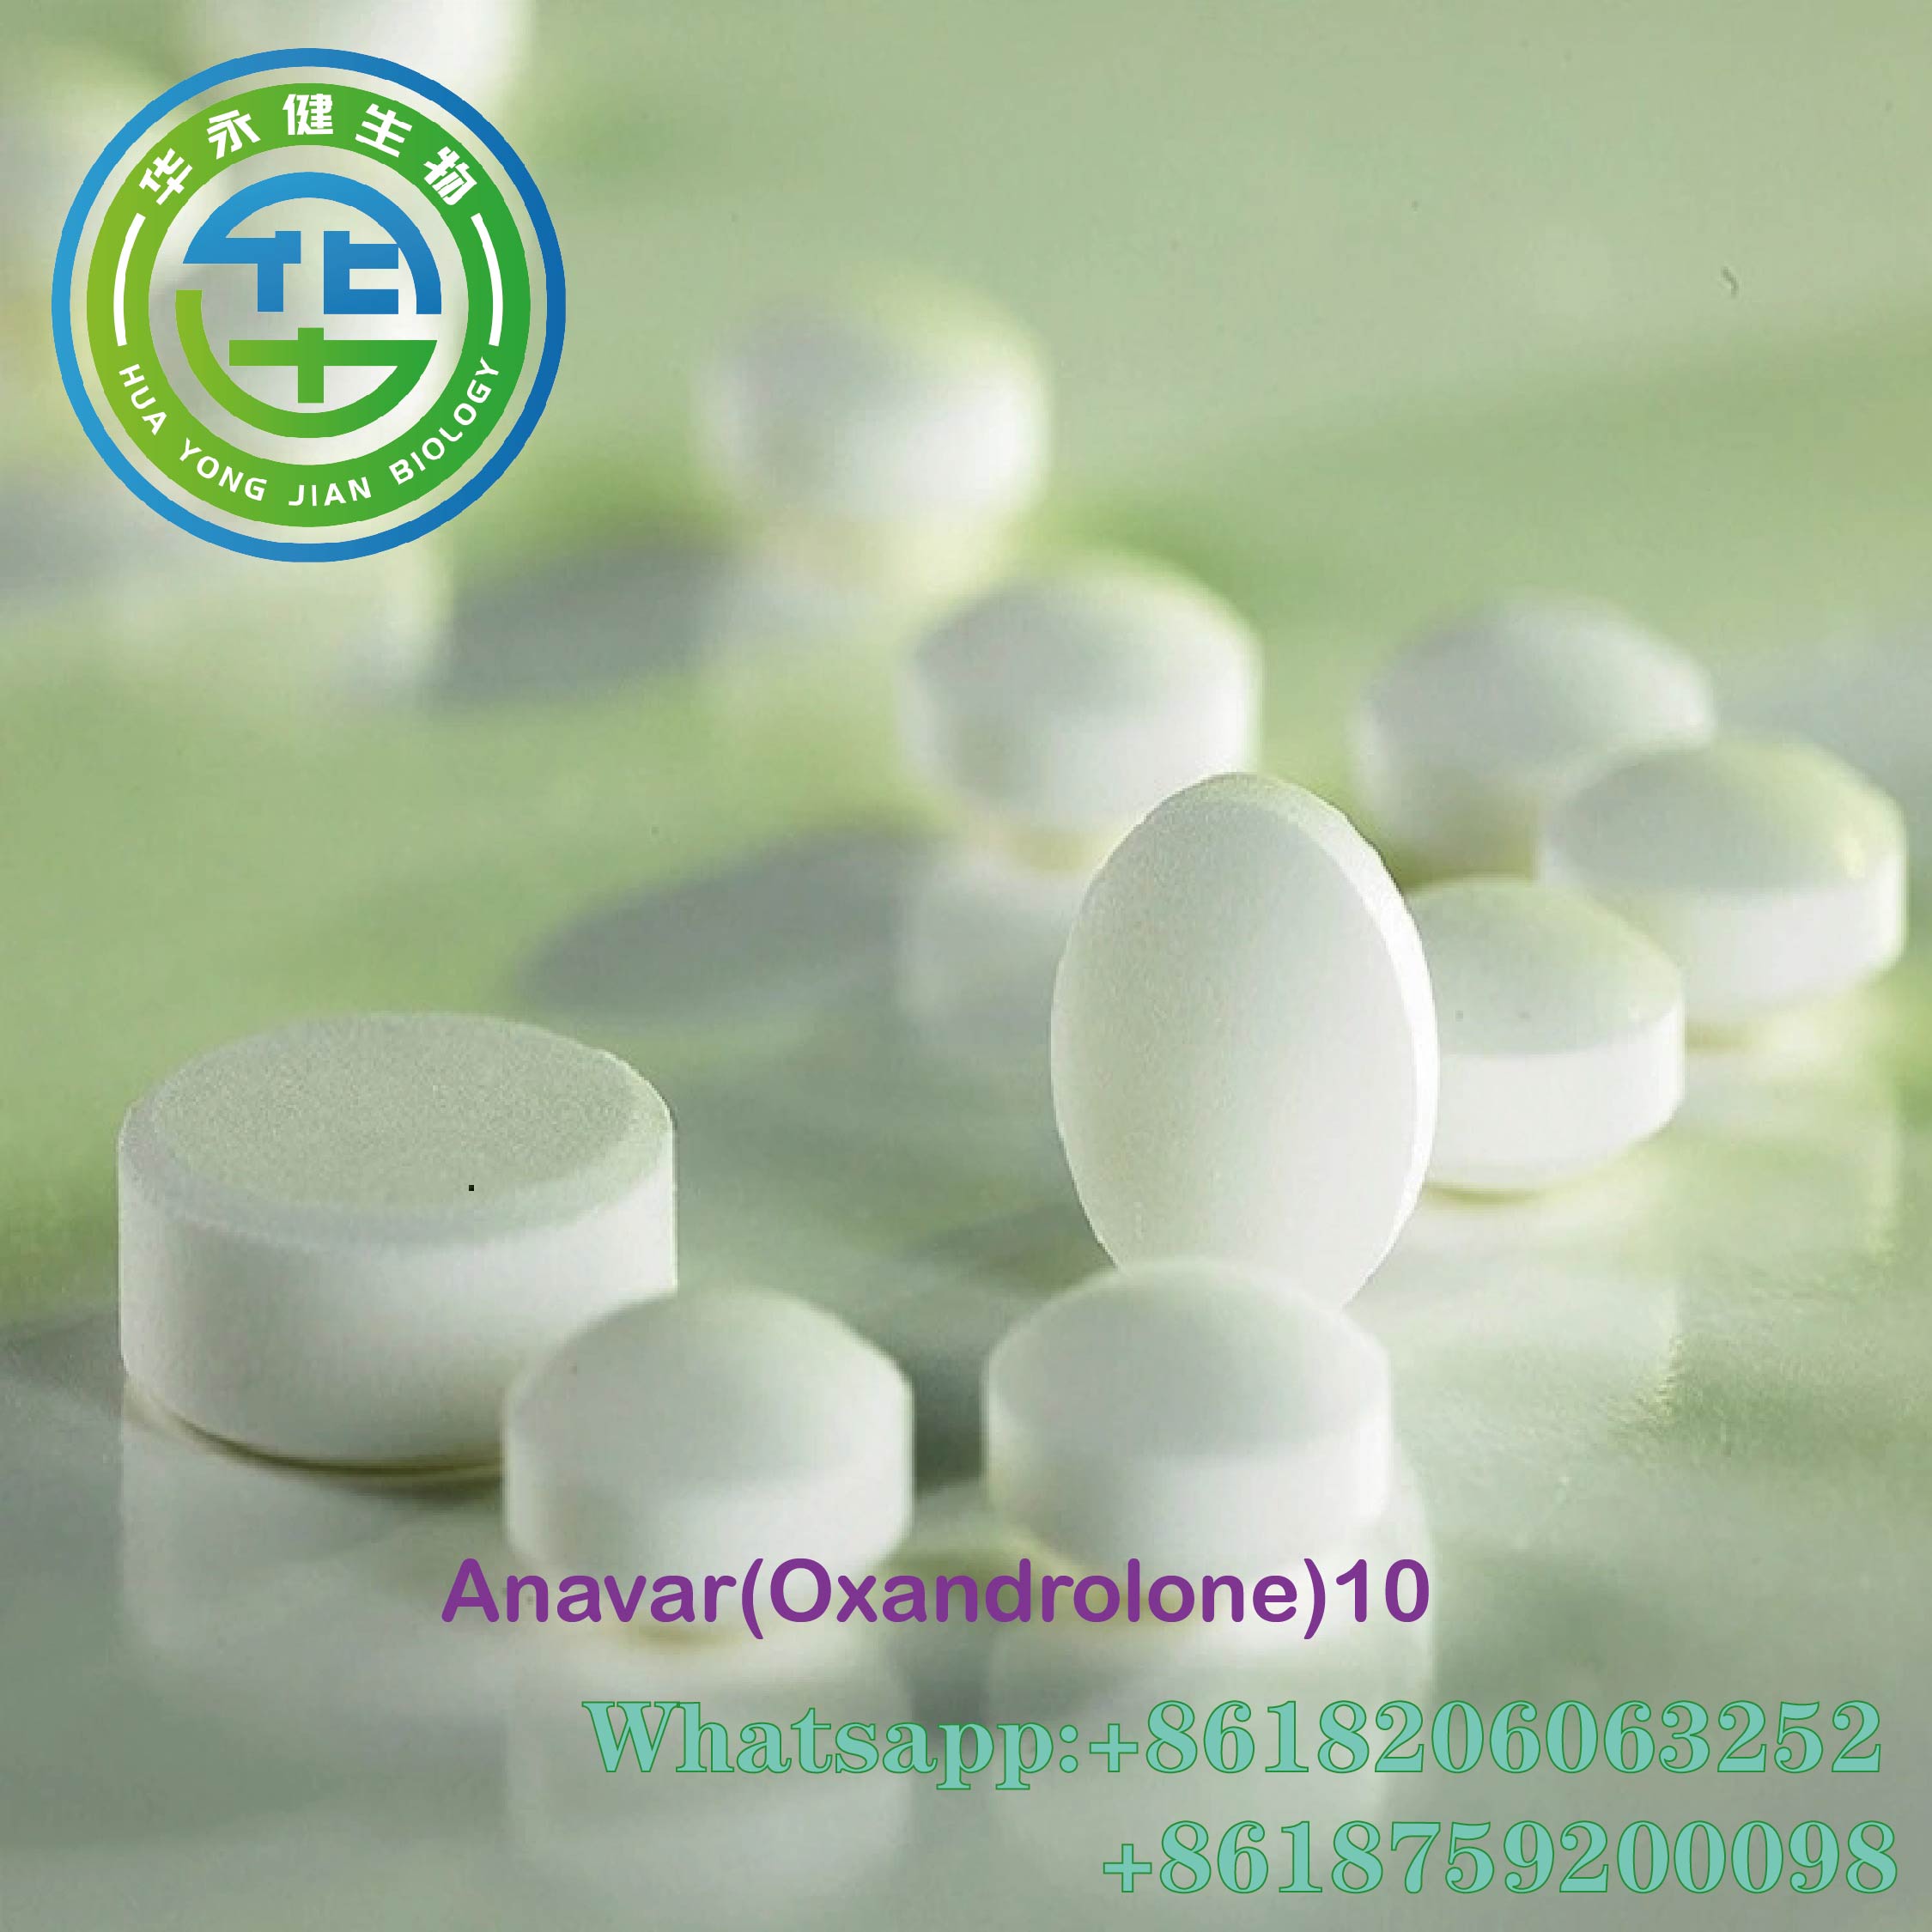 Anavar 10mg Tablets Oral Anabolic Steroids Oxandrolone 100Pic/botelya Alang sa Pagbug-at sa Timbang Featured Image